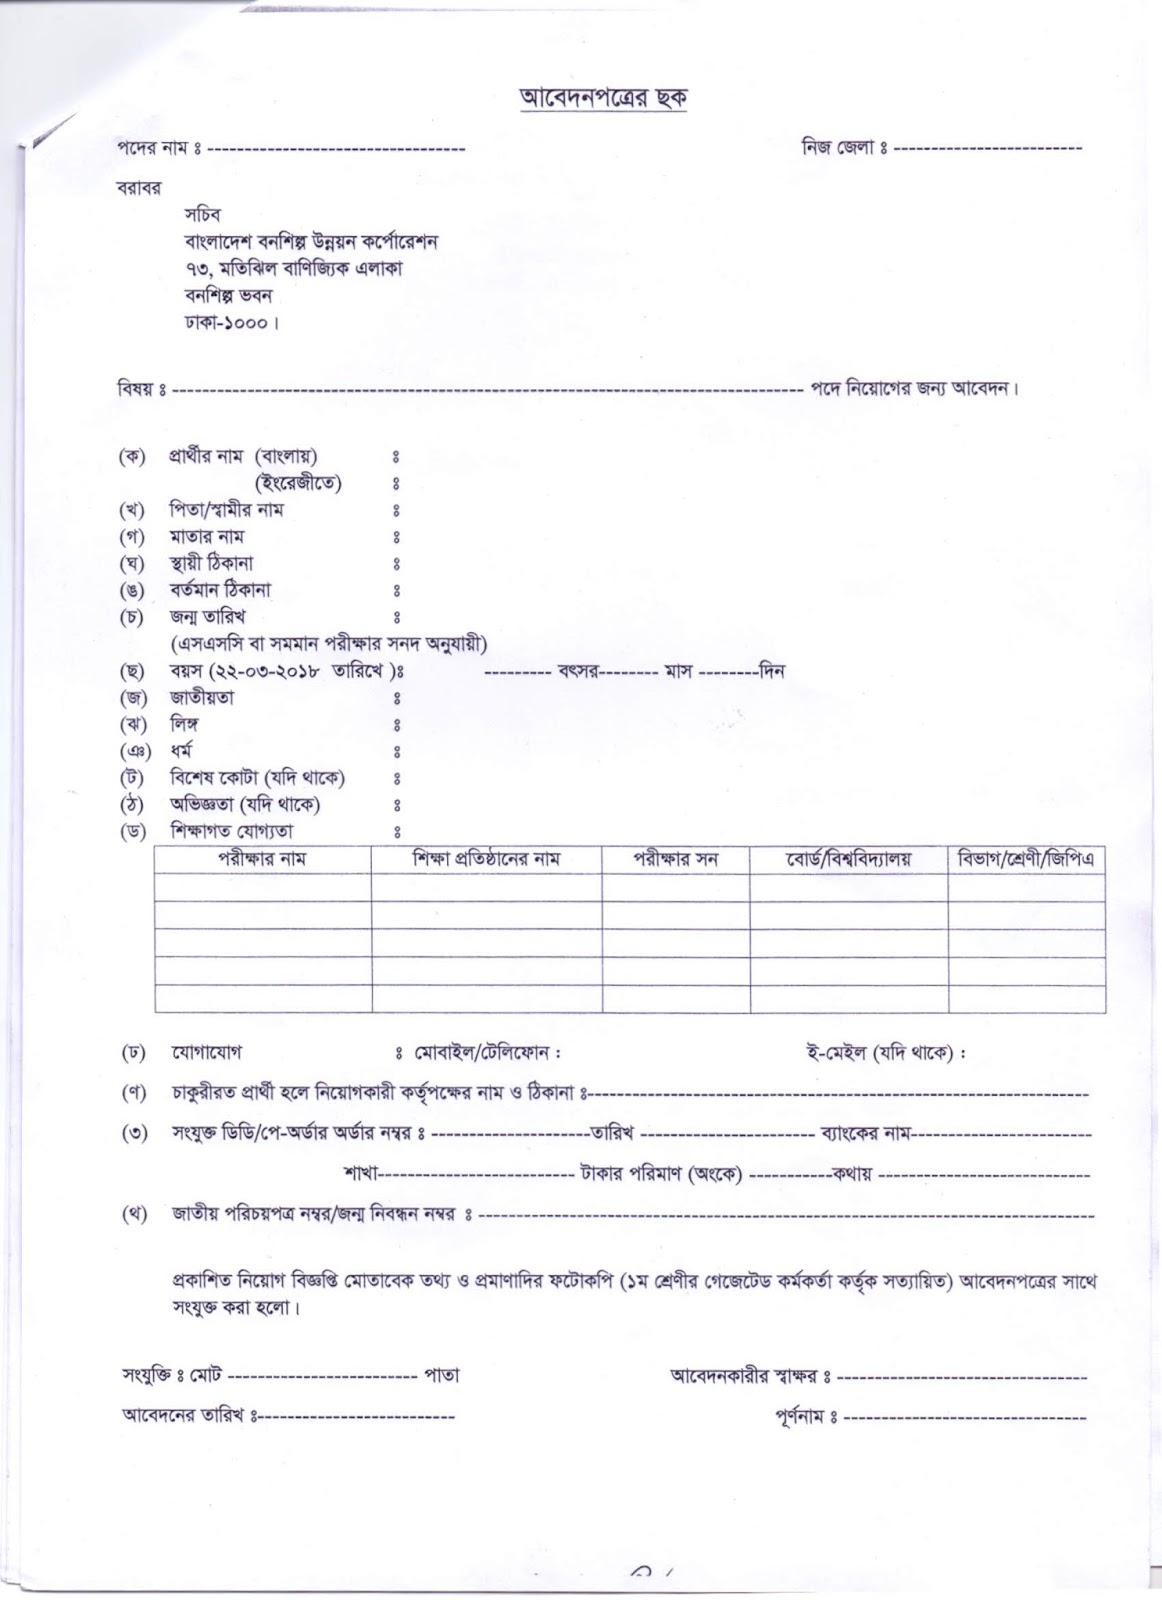 Bangladesh Forest Industries Development Corporation(BFIDC) Recruitment Application Form